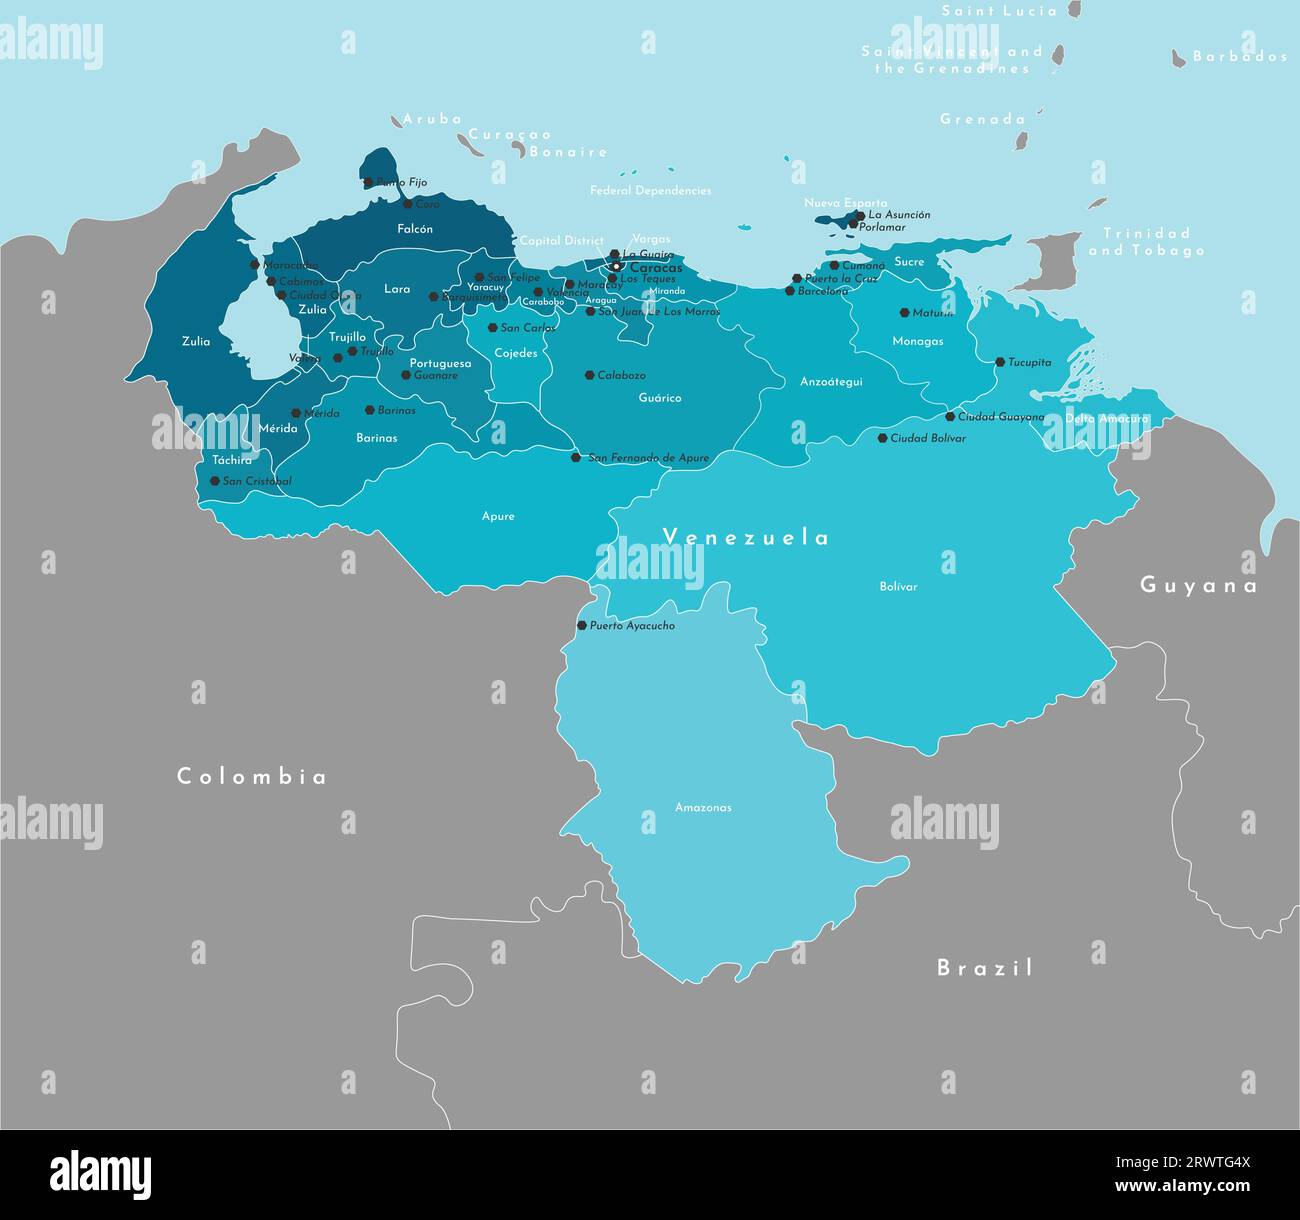 Vector Modern Illustration Simplified Administrative Map Of Venezuela